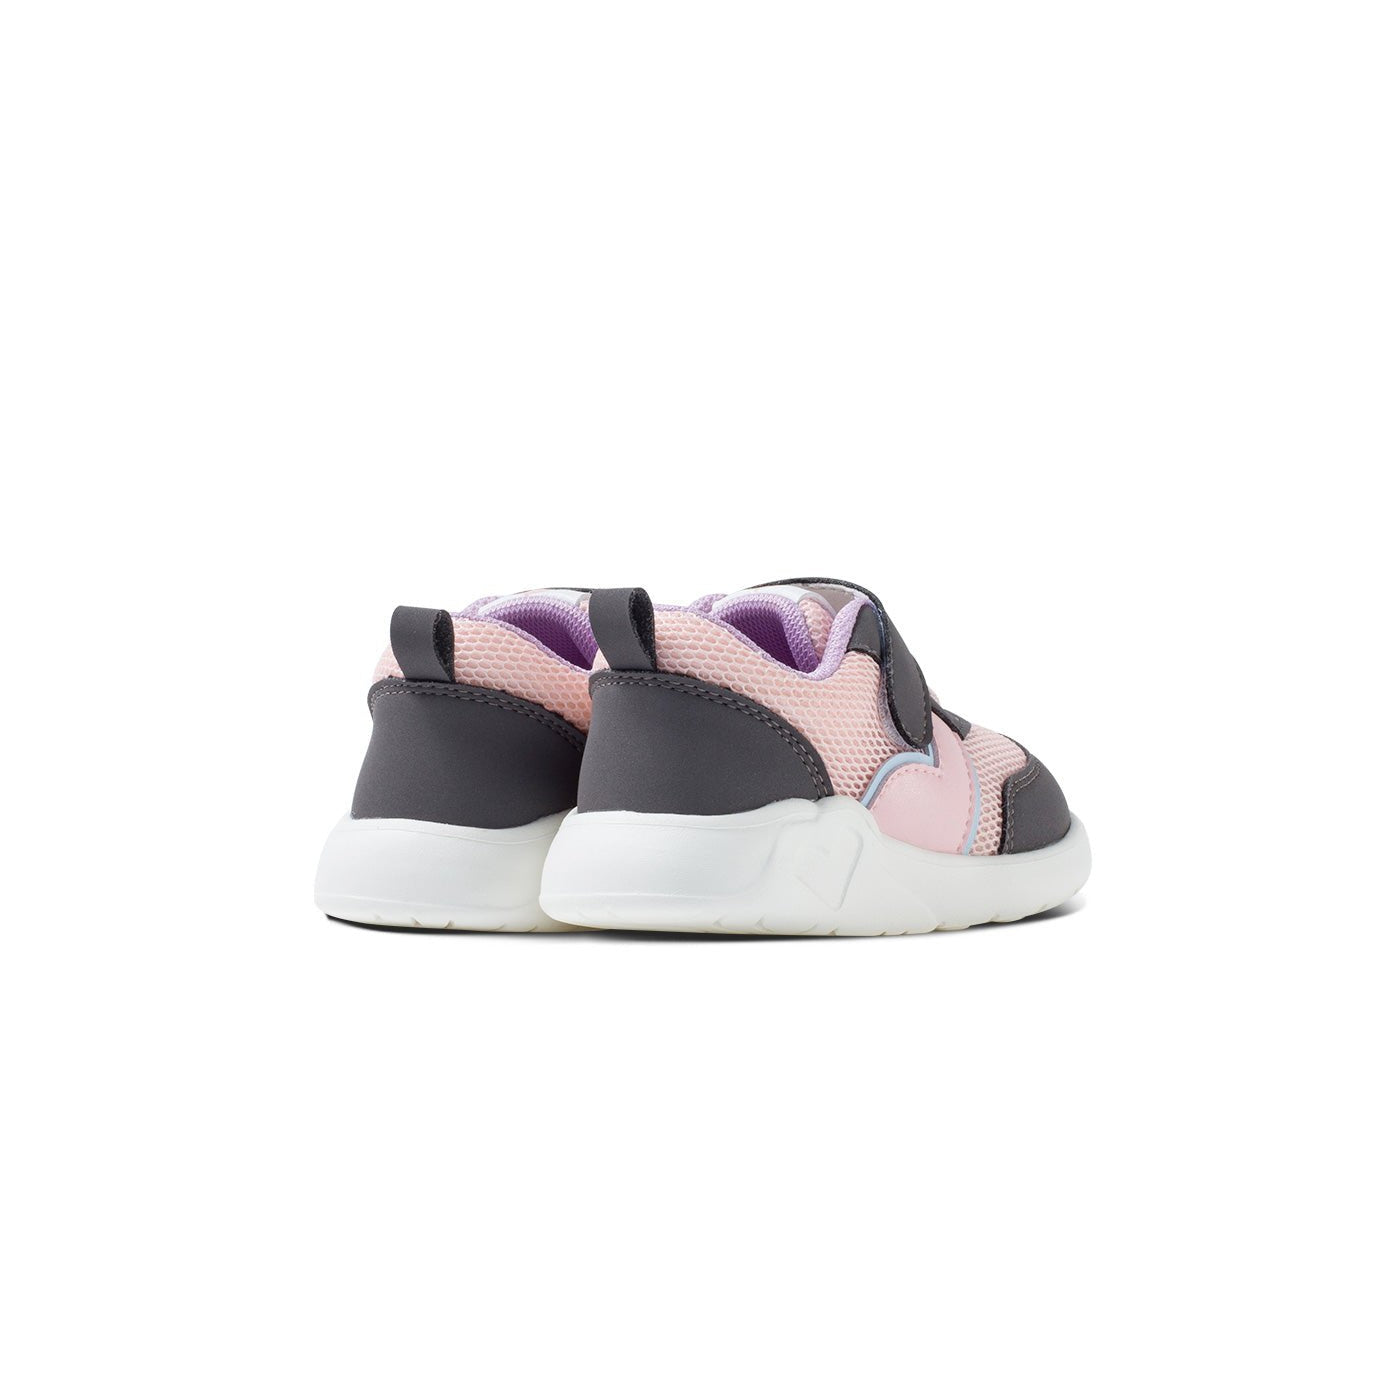 Free Breath Soft Sole Anti-slip Pre-walker Pink Baby Girl Sneakers - 0cm